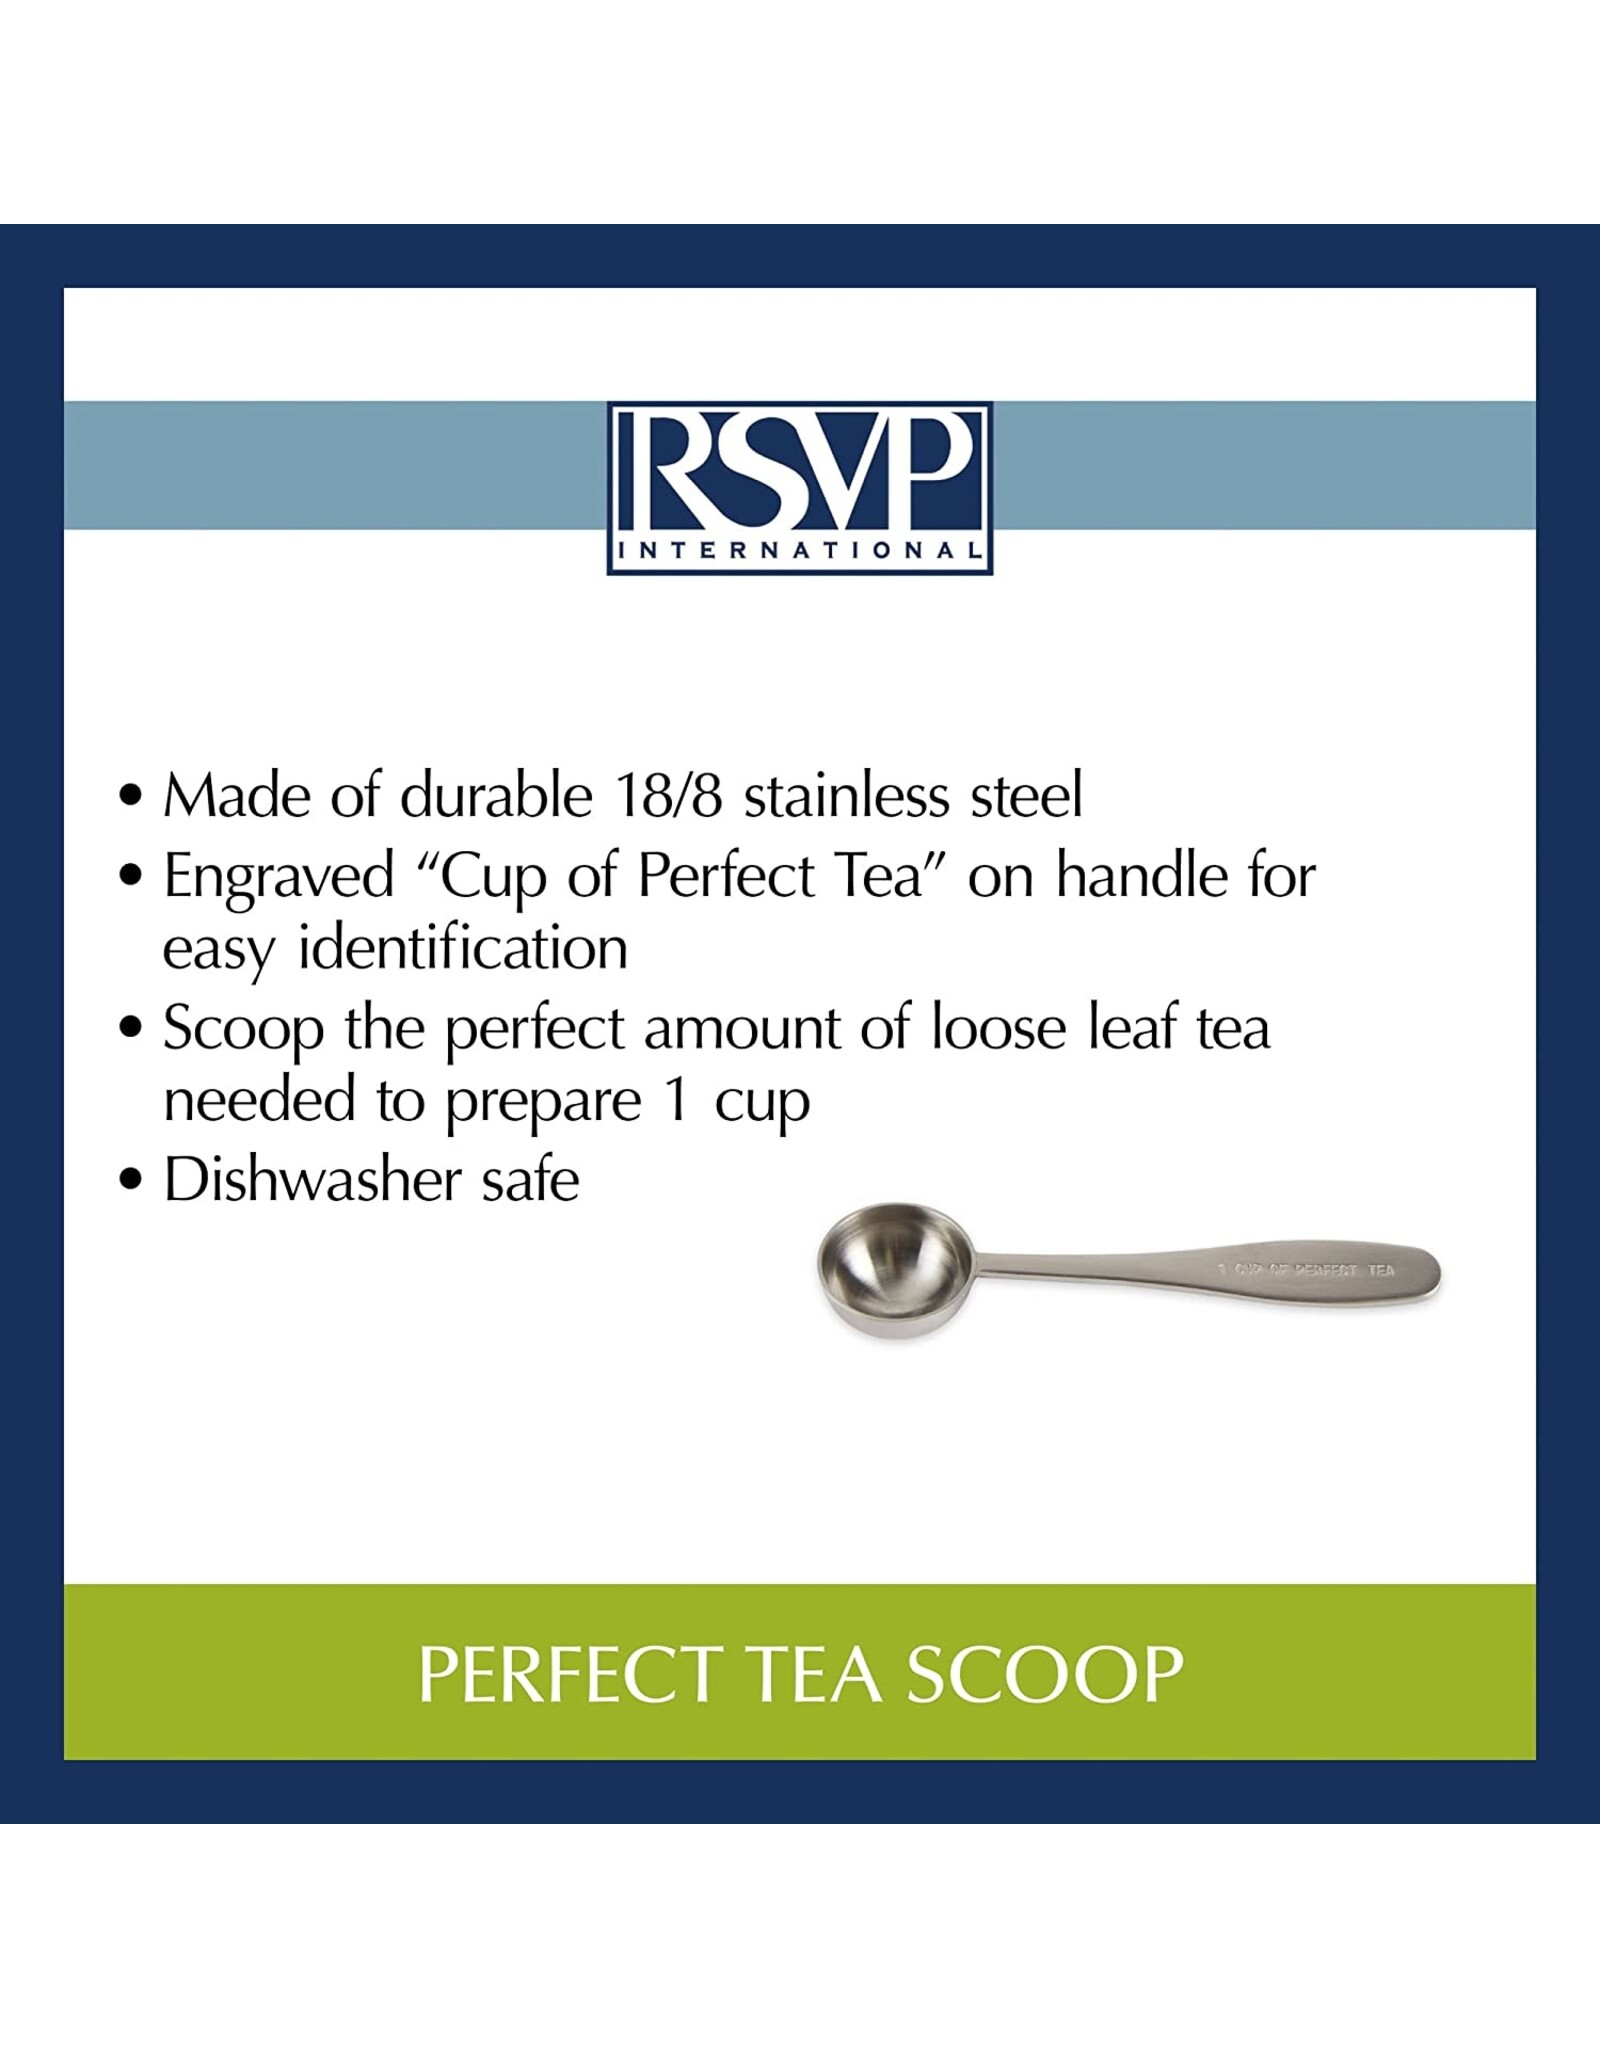 RSVP Perfect Tea Scoop